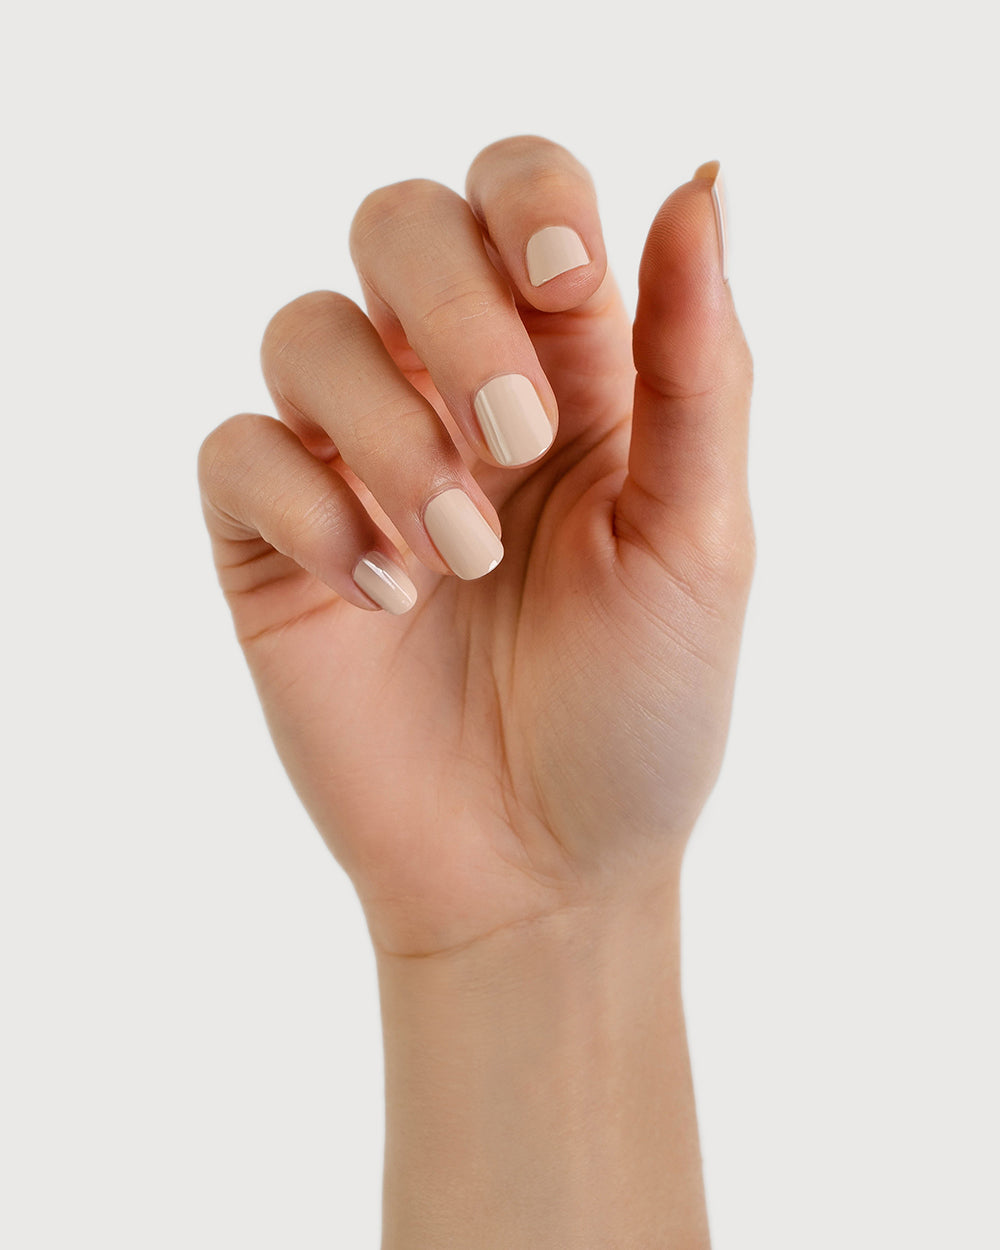 classic beige nail polish hand swatch on fair skin tone